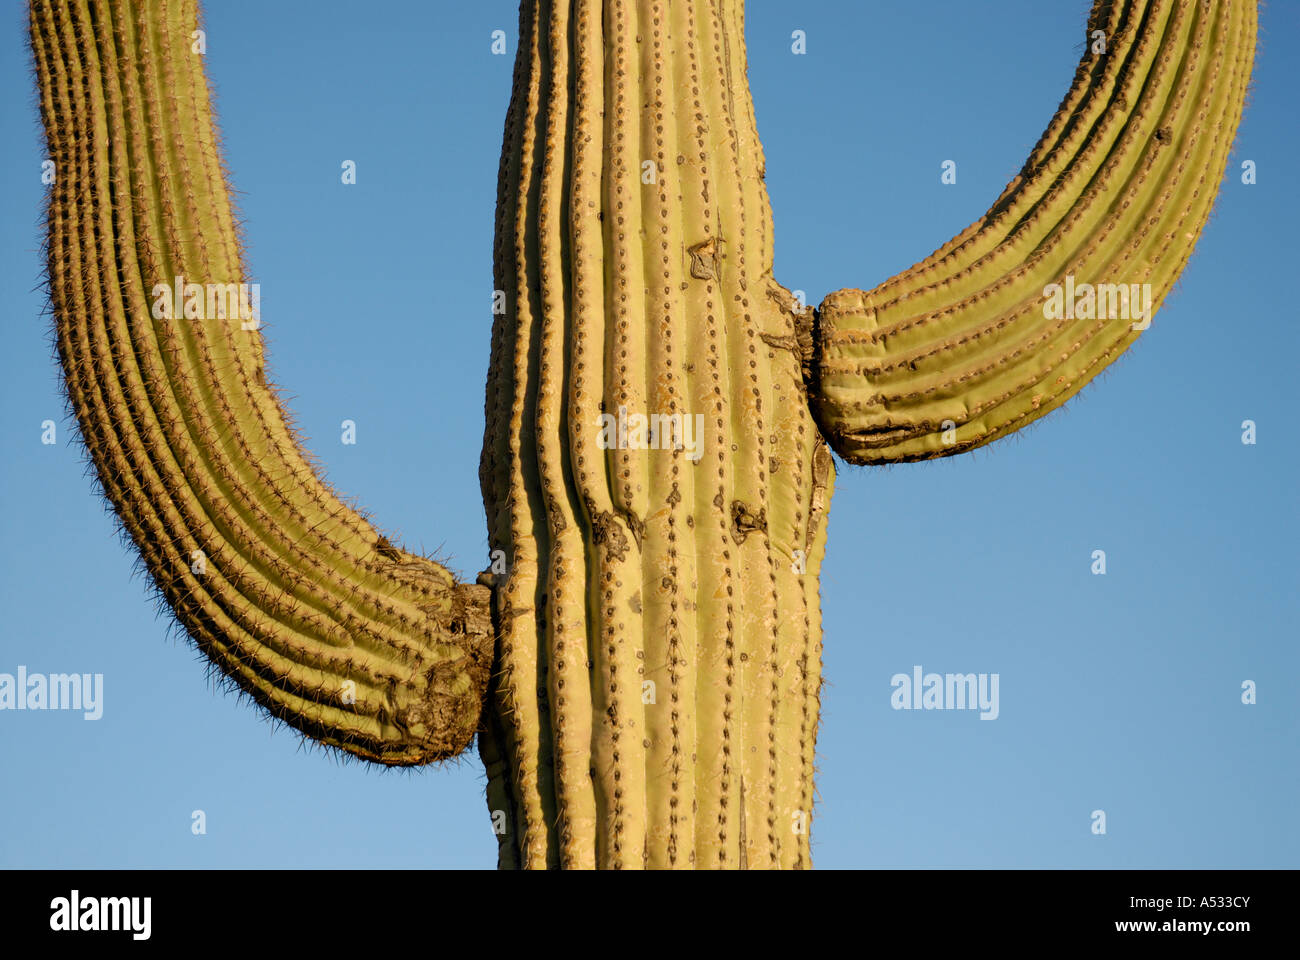 Saguaro Cactus, Carnegiea gigantea, with two arms against blue sky, Sonoran Desert, southwestern USA Stock Photo